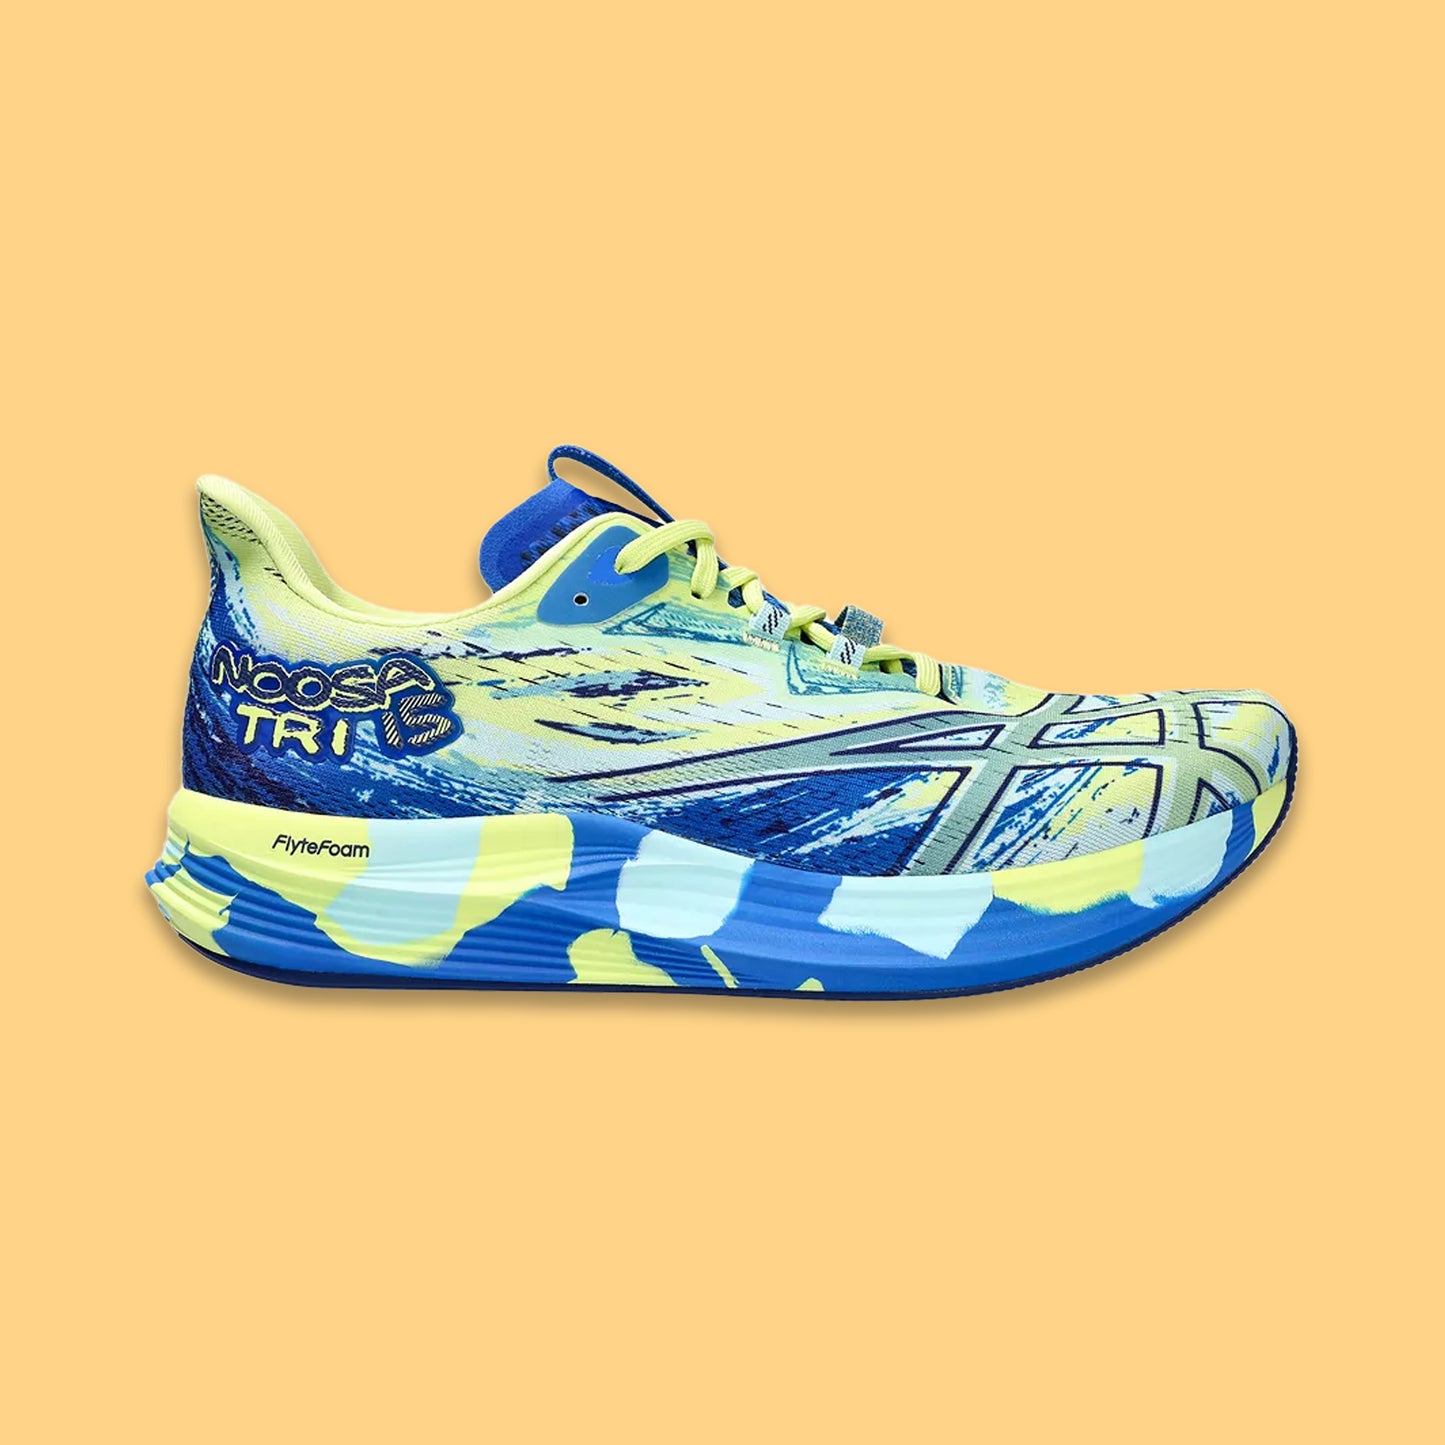 Men's Gel Noosa Tri 15 - Fast Stability Running Shoes